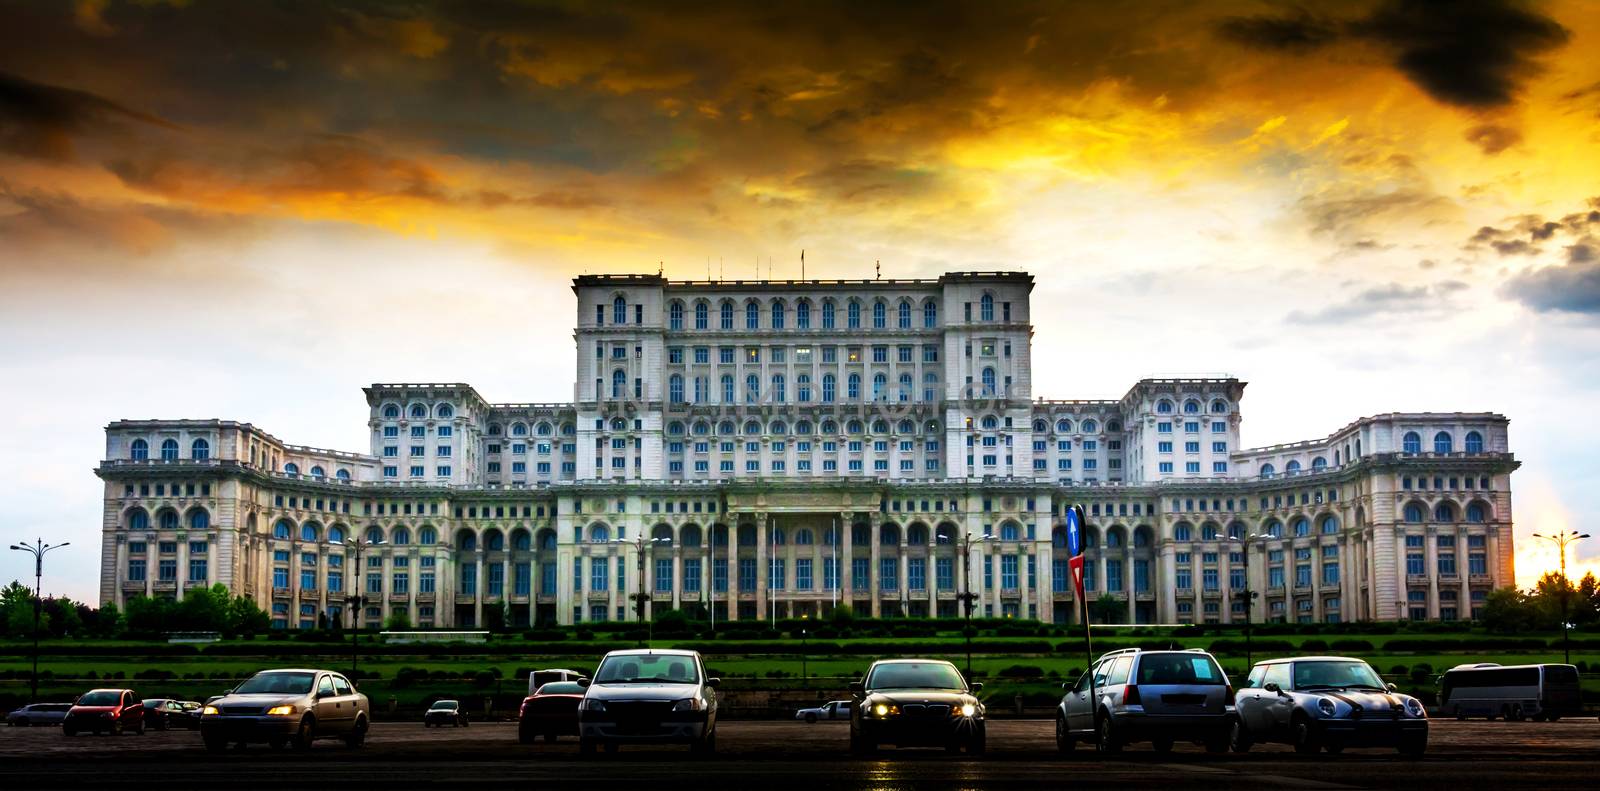 Parliament Palace, second largest building world wide, Bucharest, Romania.